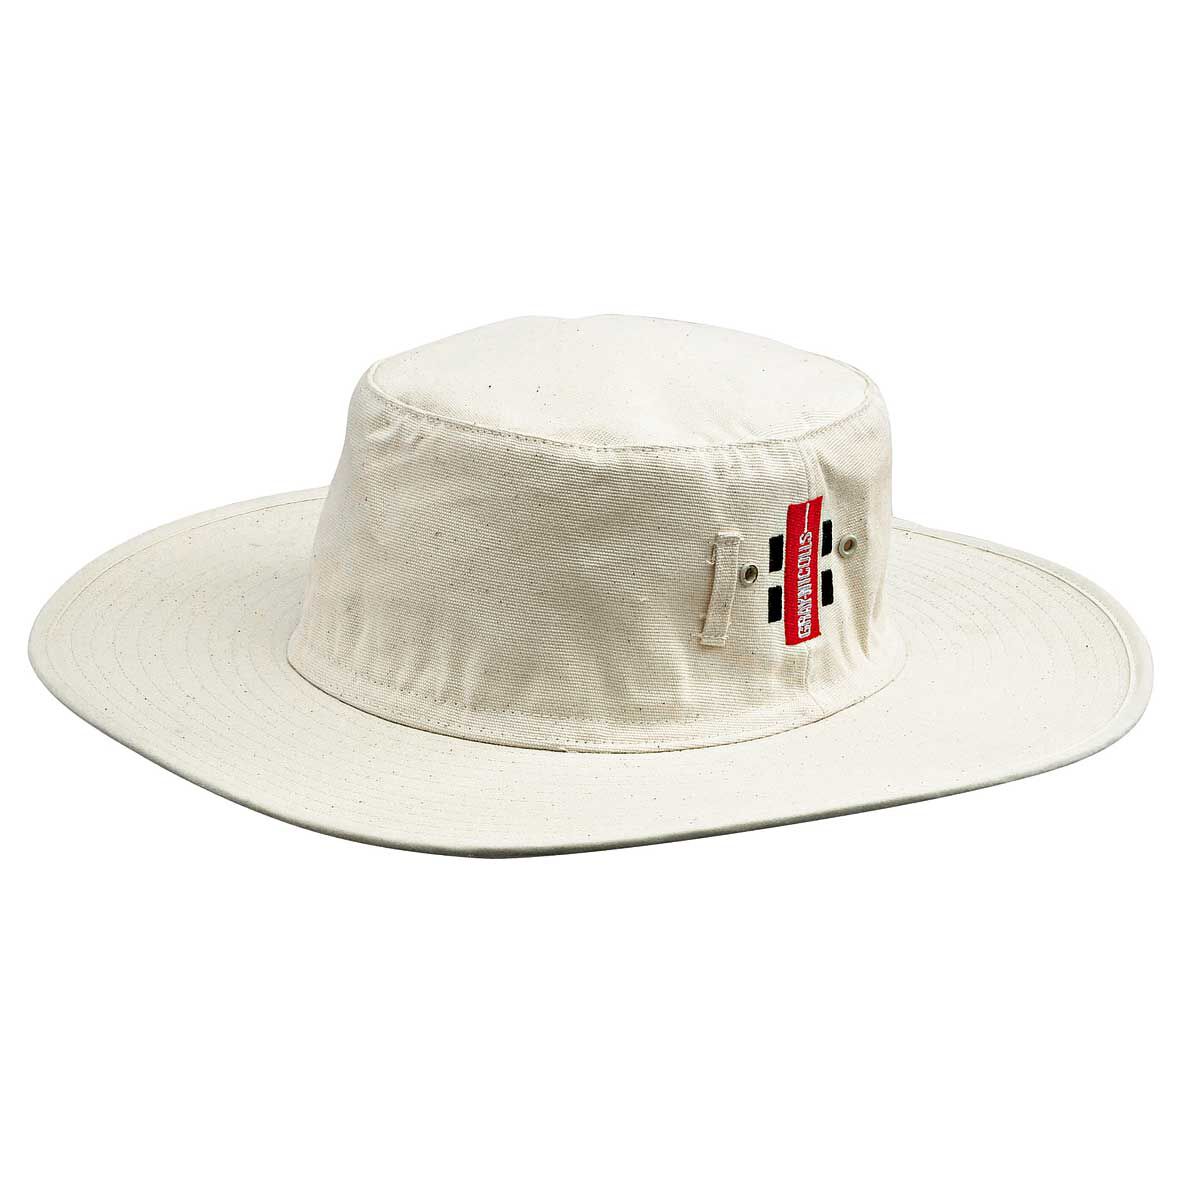 Cricket Sun Hat Kookaburra XLarge for sale online 